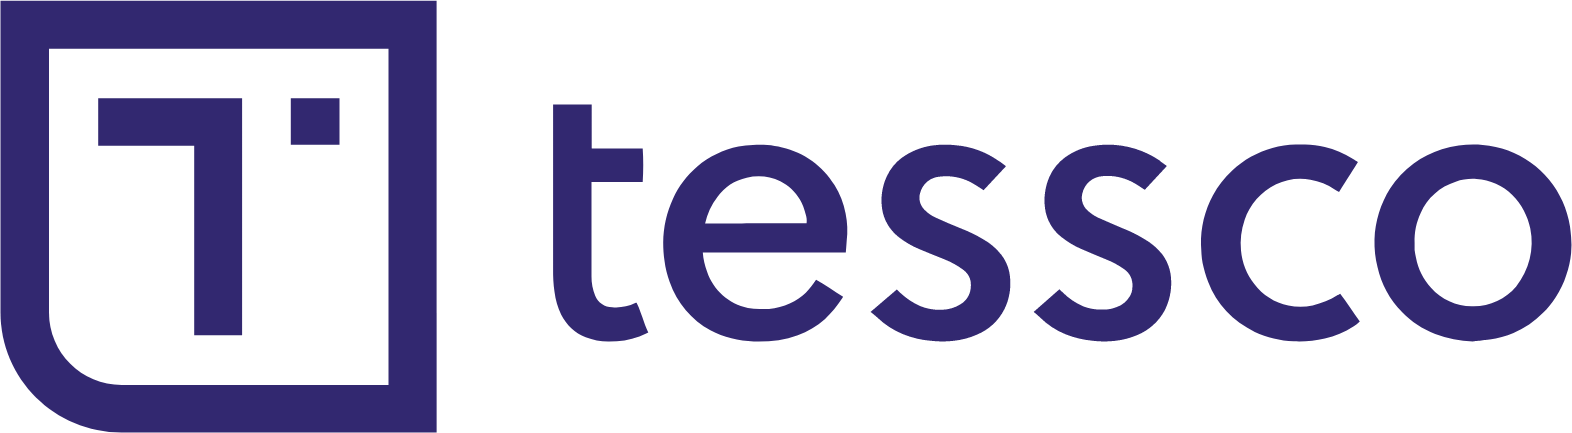 TESSCO Technologies logo large (transparent PNG)